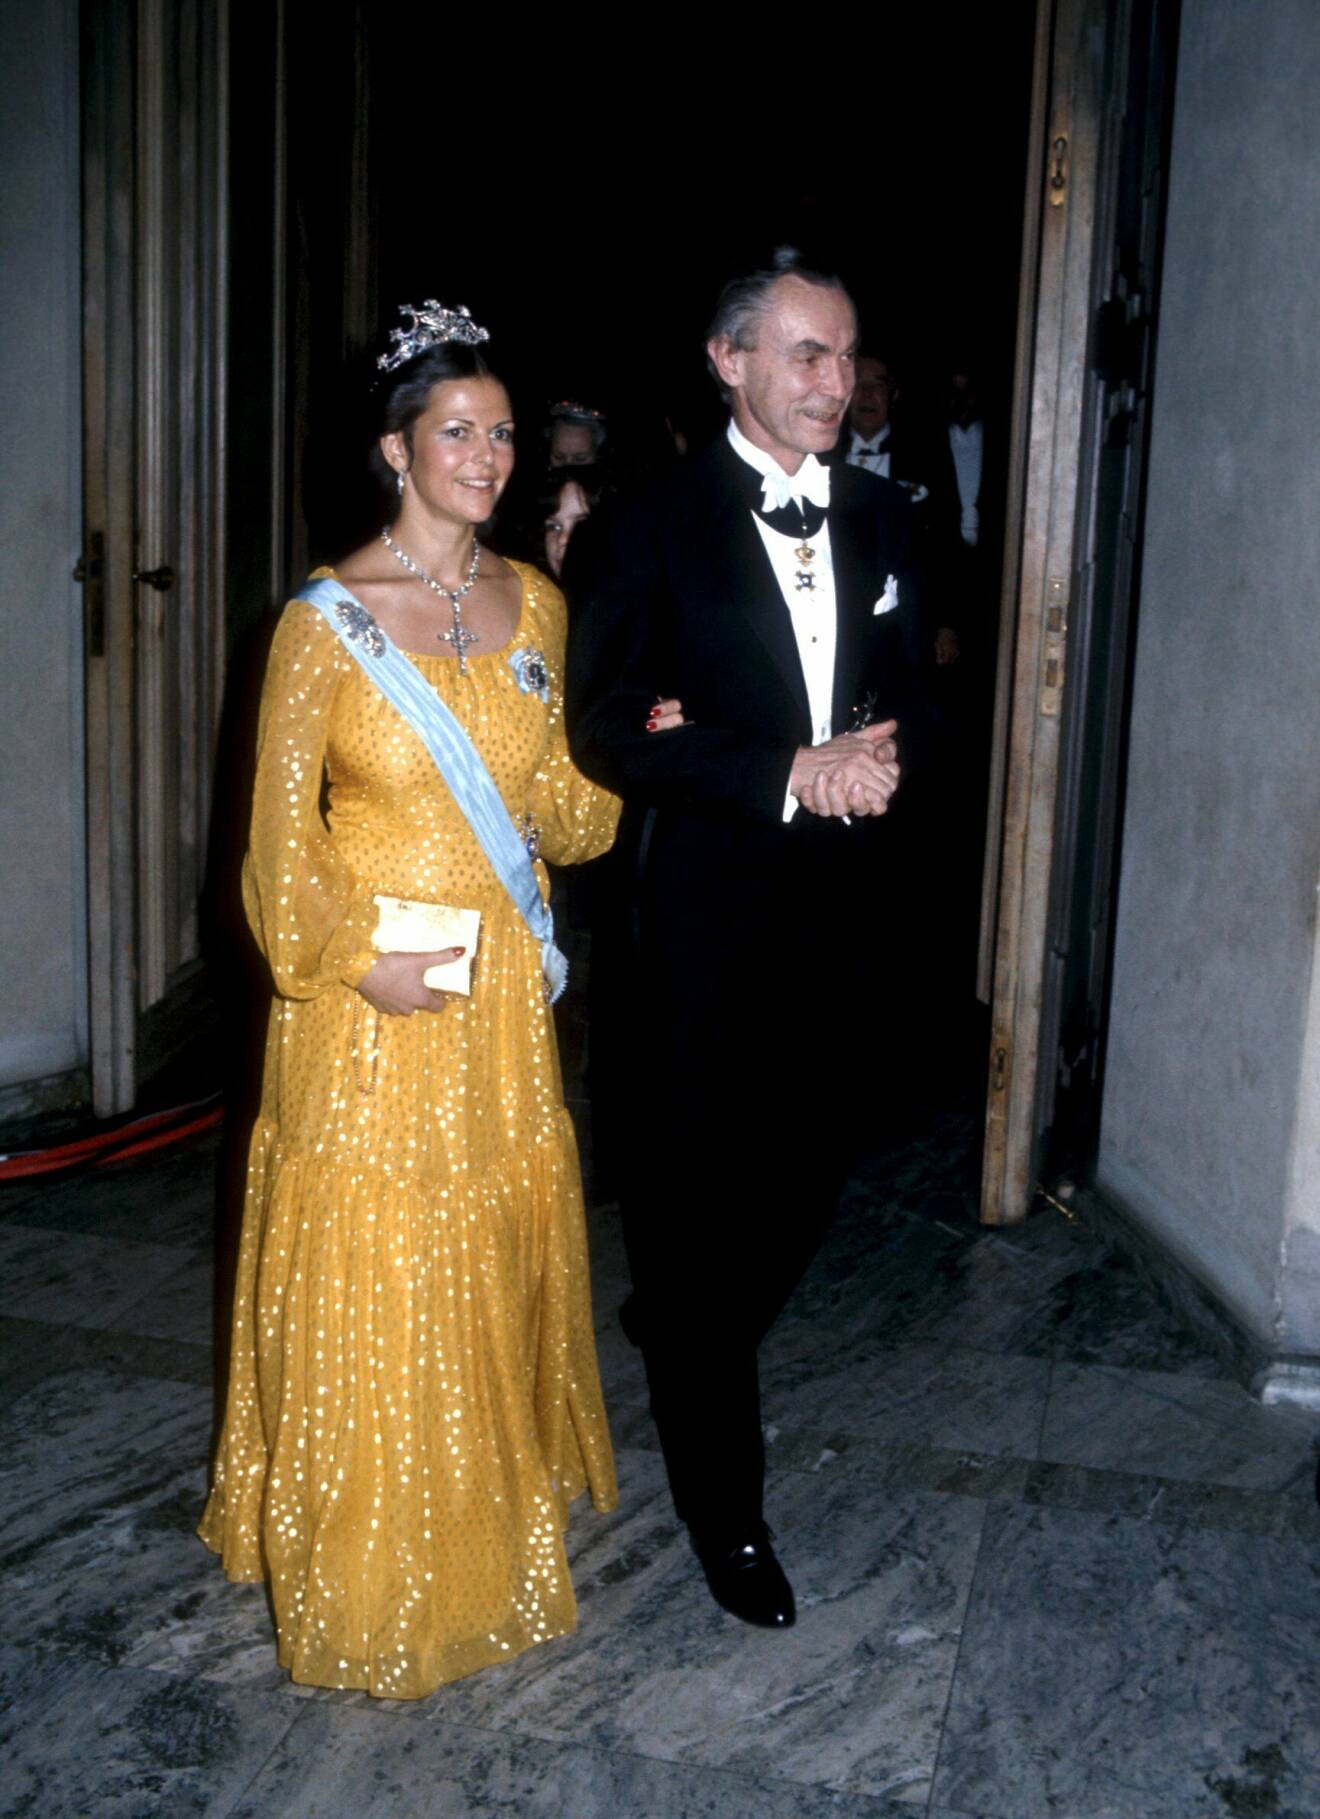 Nobelmiddagen i Stadshuset. Bilden: Drottning Silvia och Sune Berglund, Nobelstiftelsen, 1976.